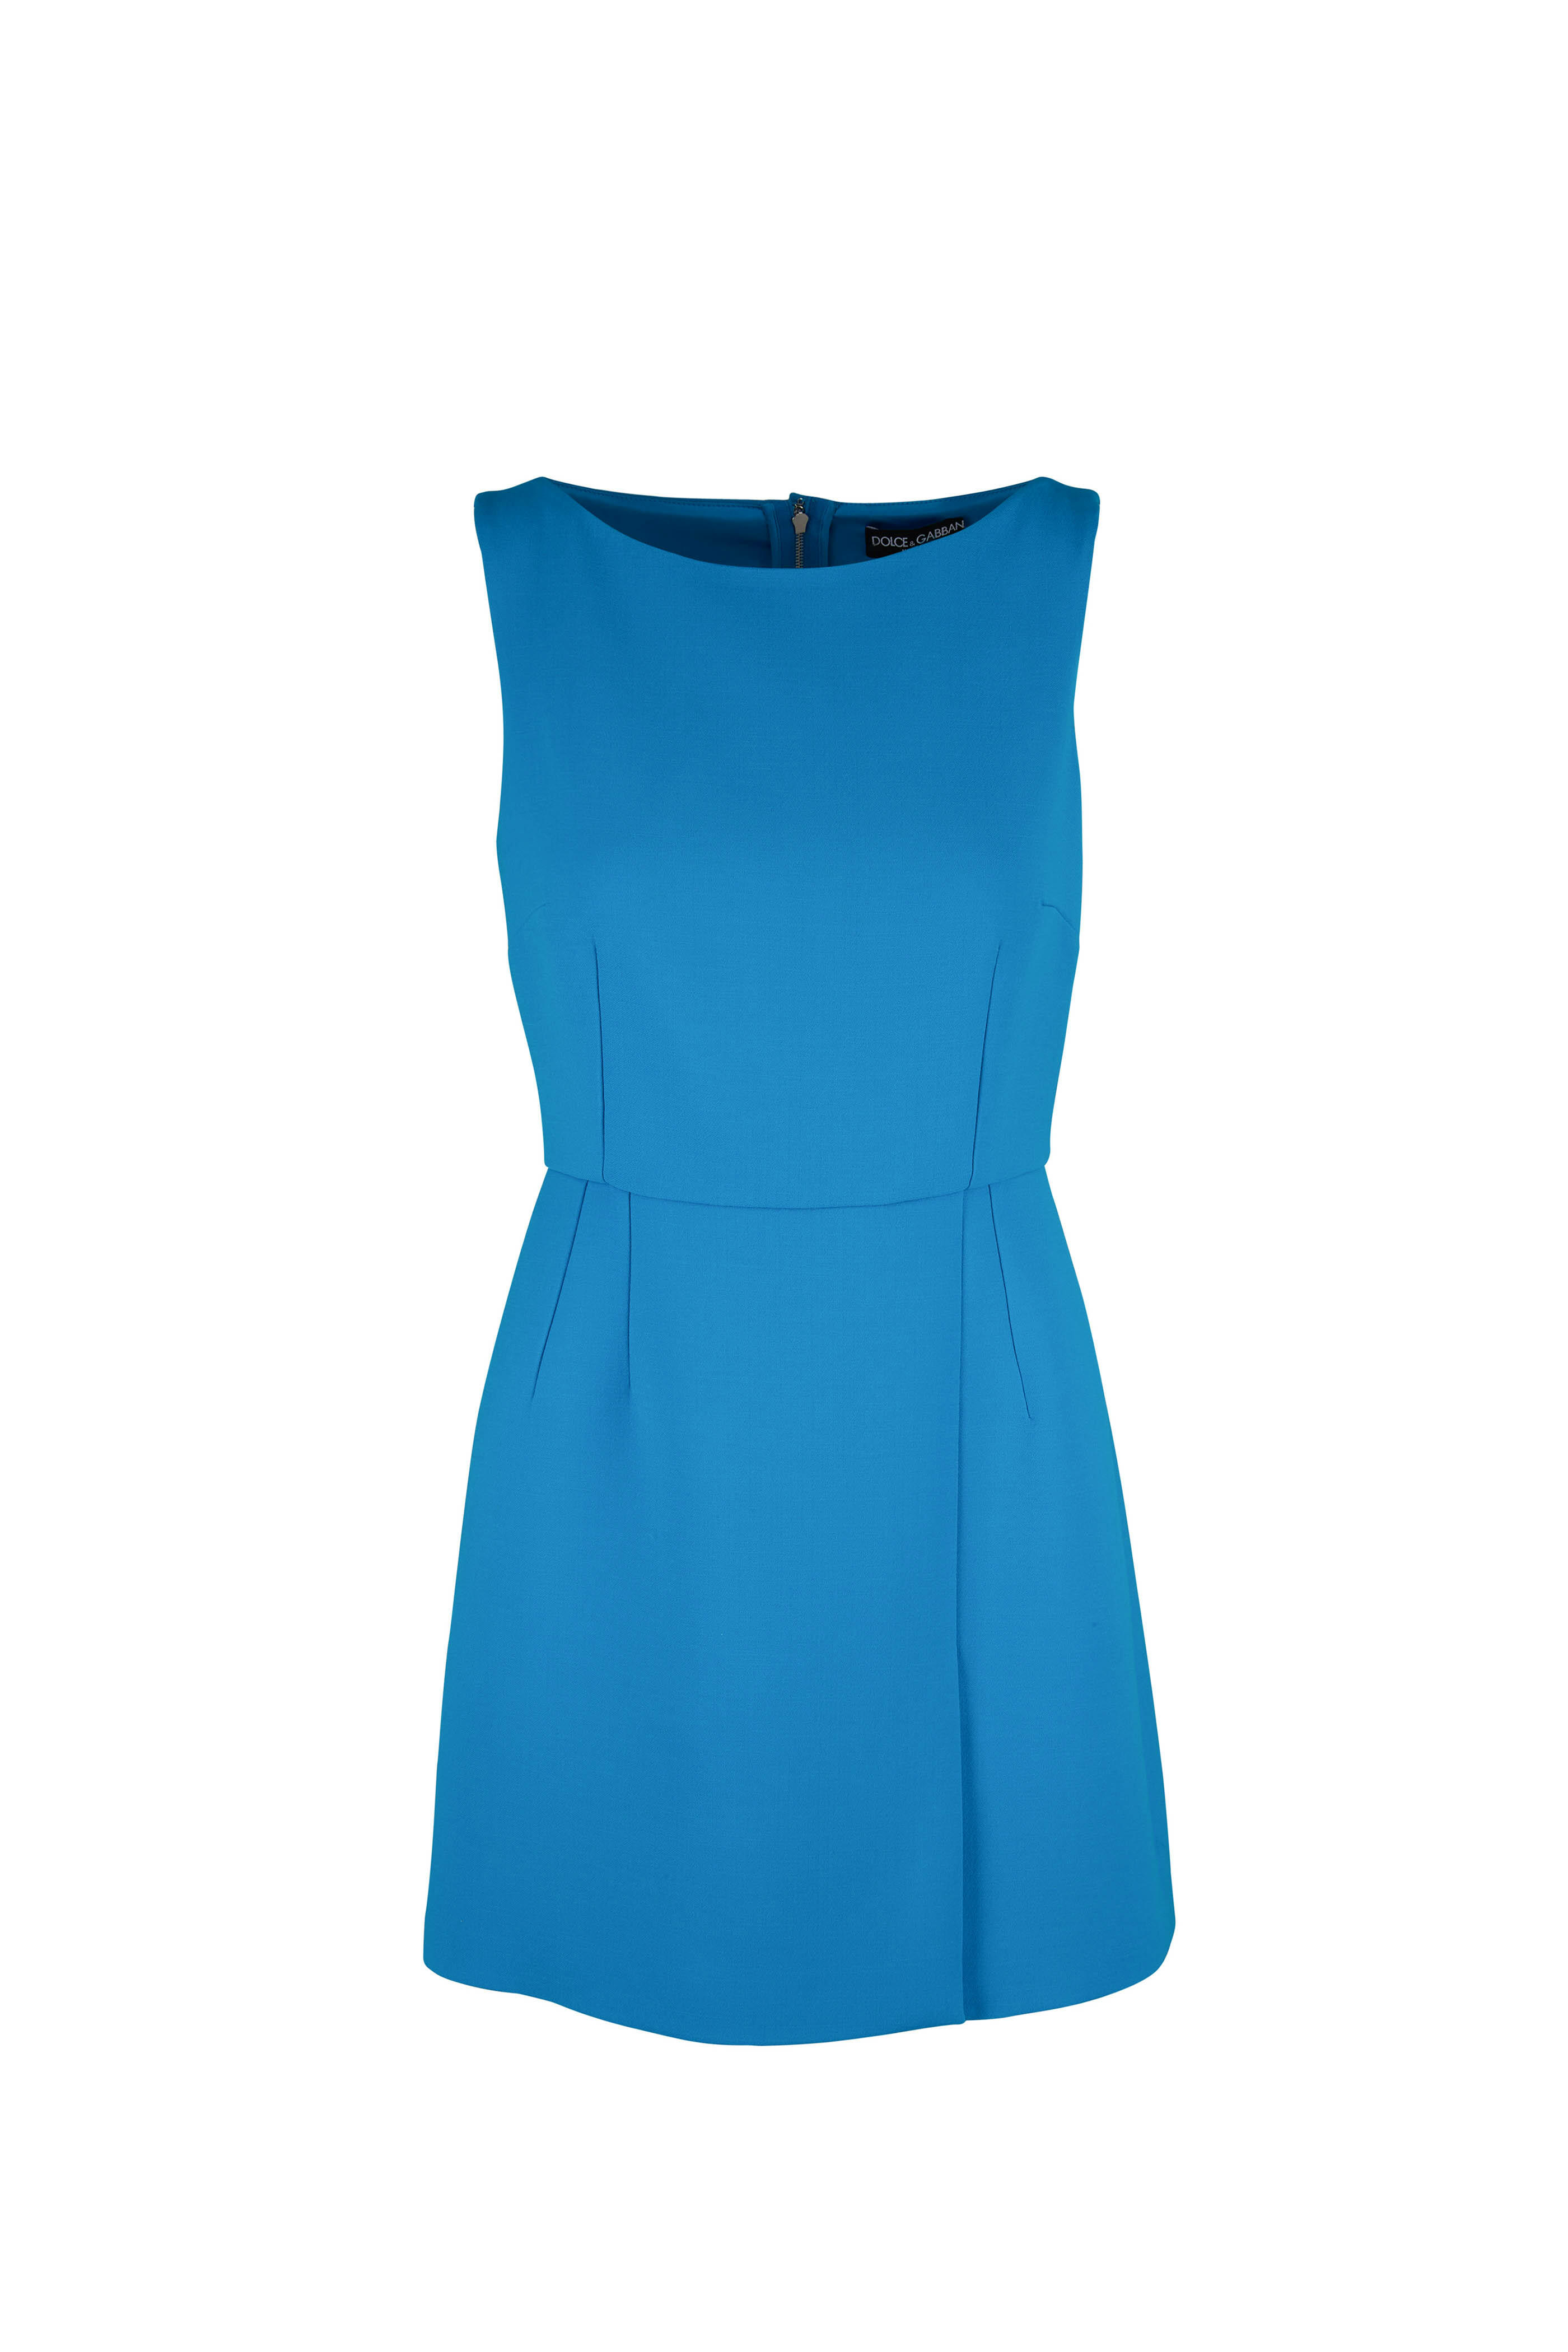 Dolce & Gabbana - Turquoise Wool Sleeveless Dress